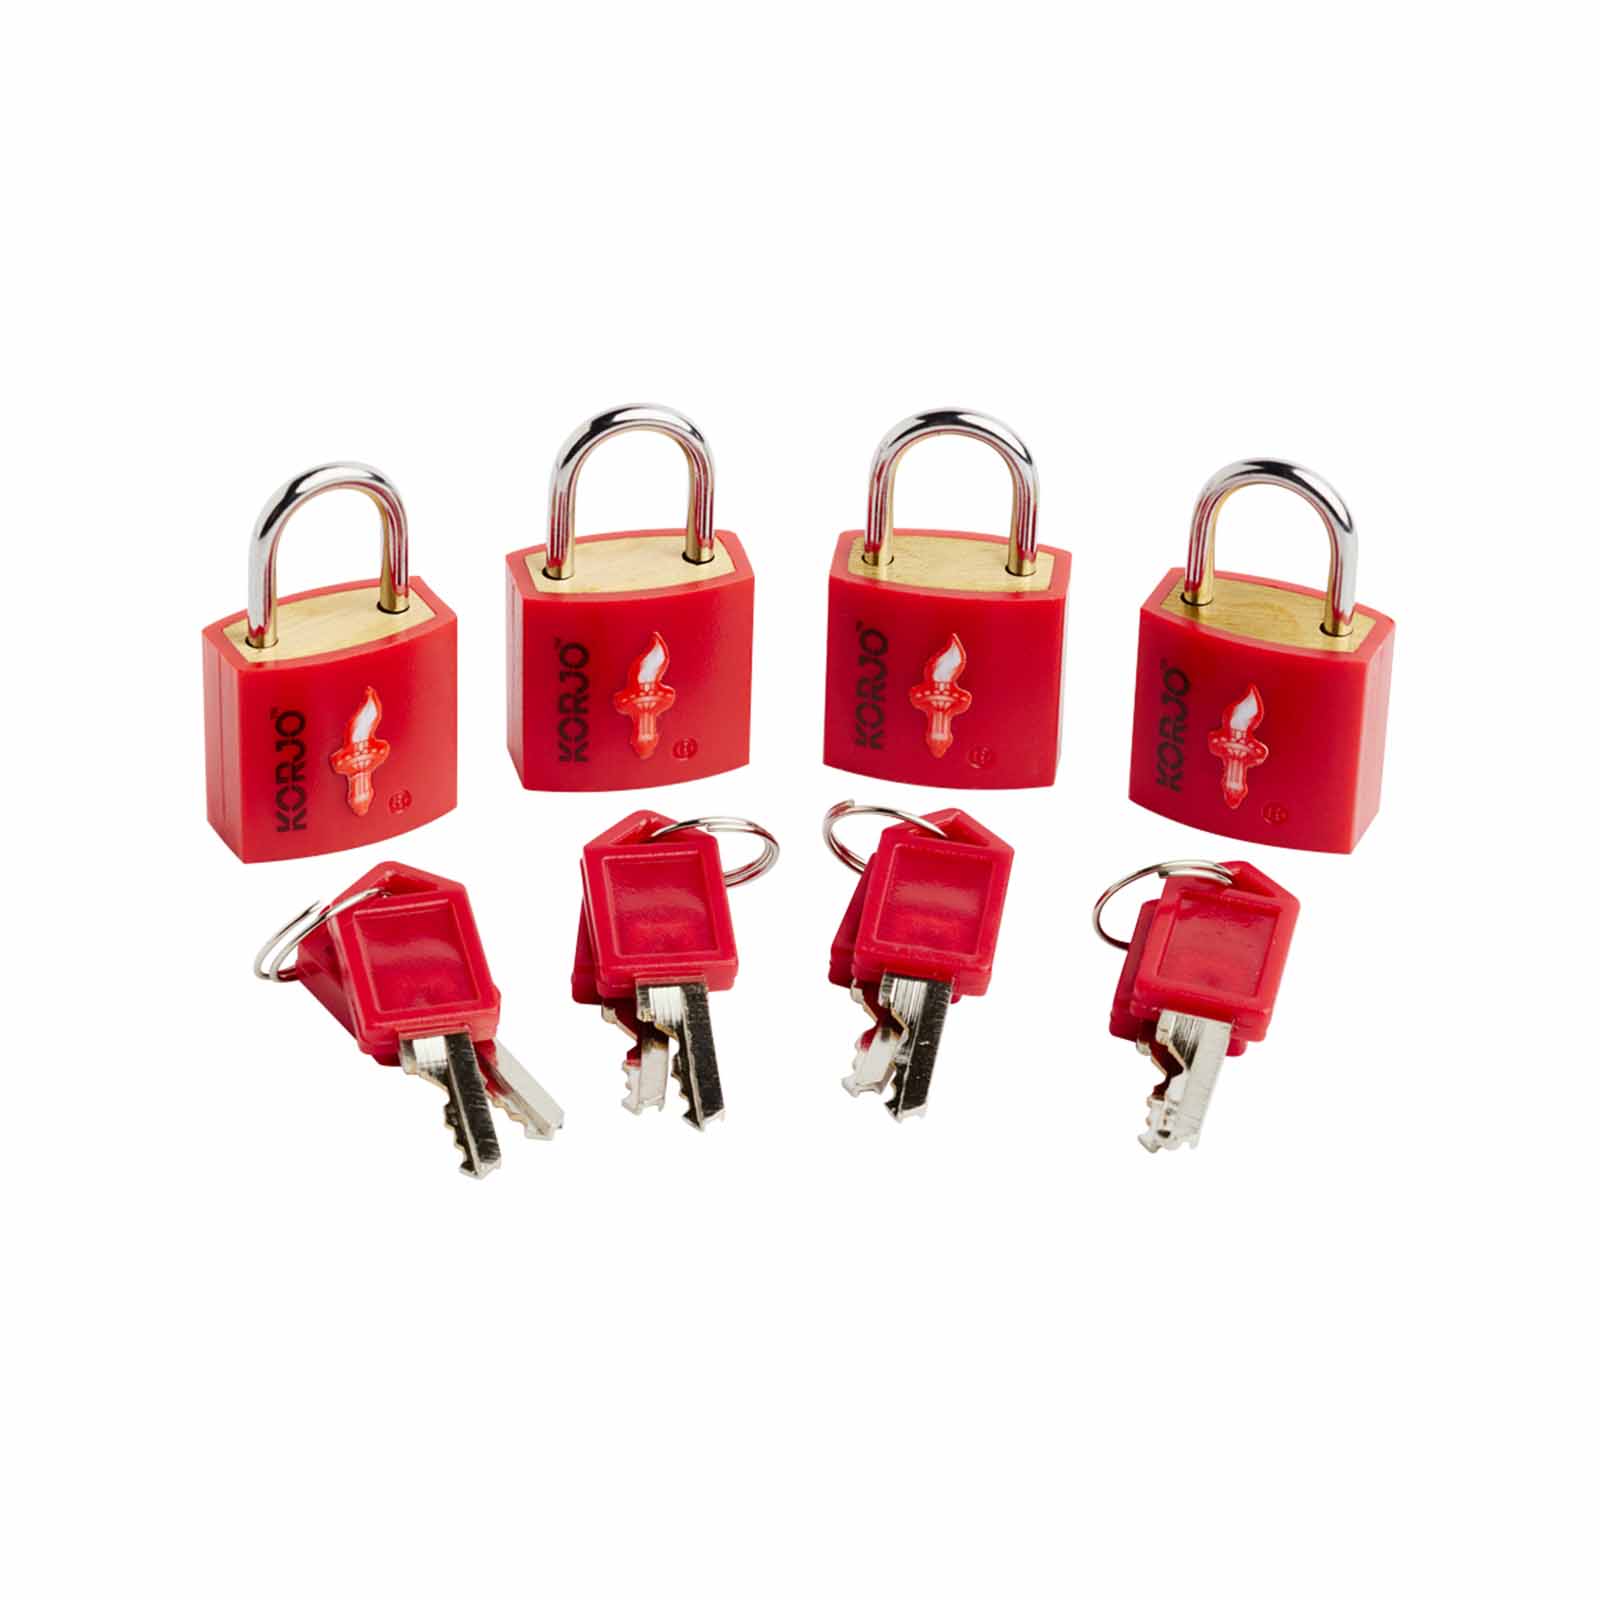 Korjo-Tsa-Keyed-Locks-Four-Pack-Red-Angle